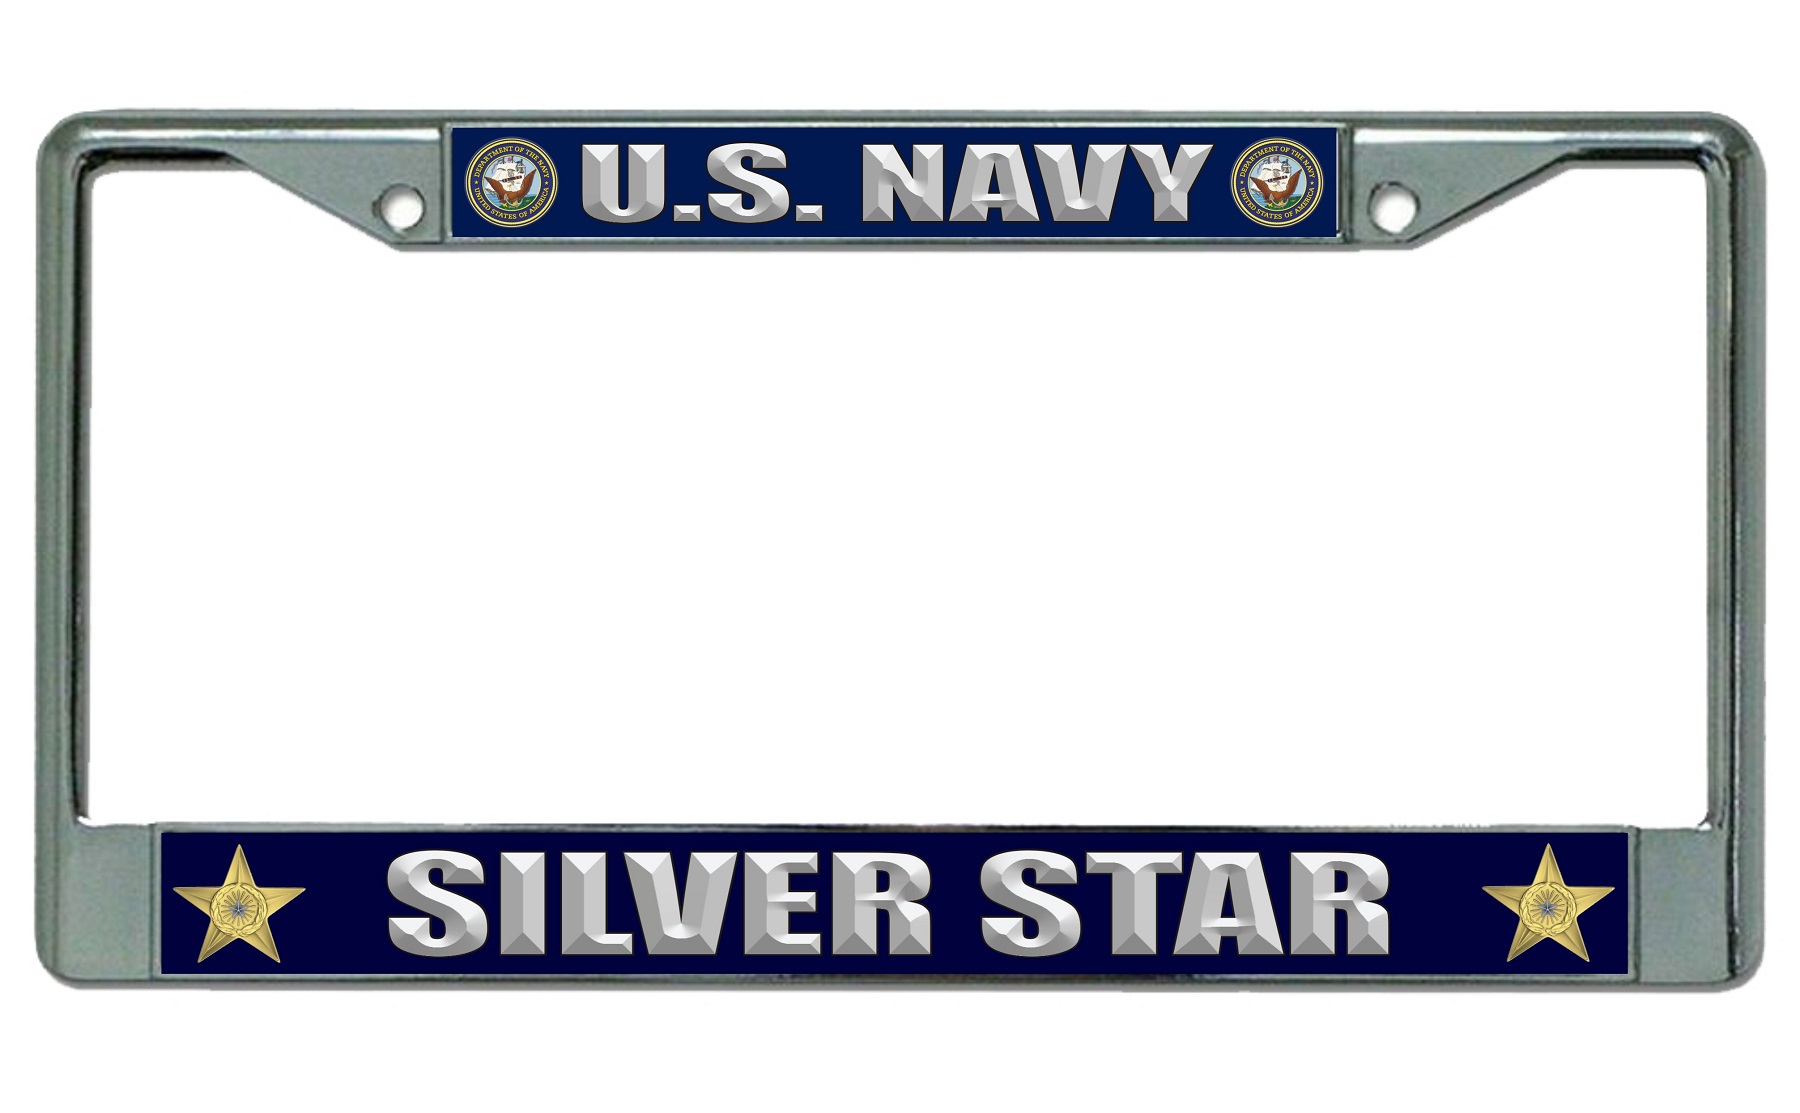 License Plates Online U.S. Navy Silver Star Chrome License Plate Frame